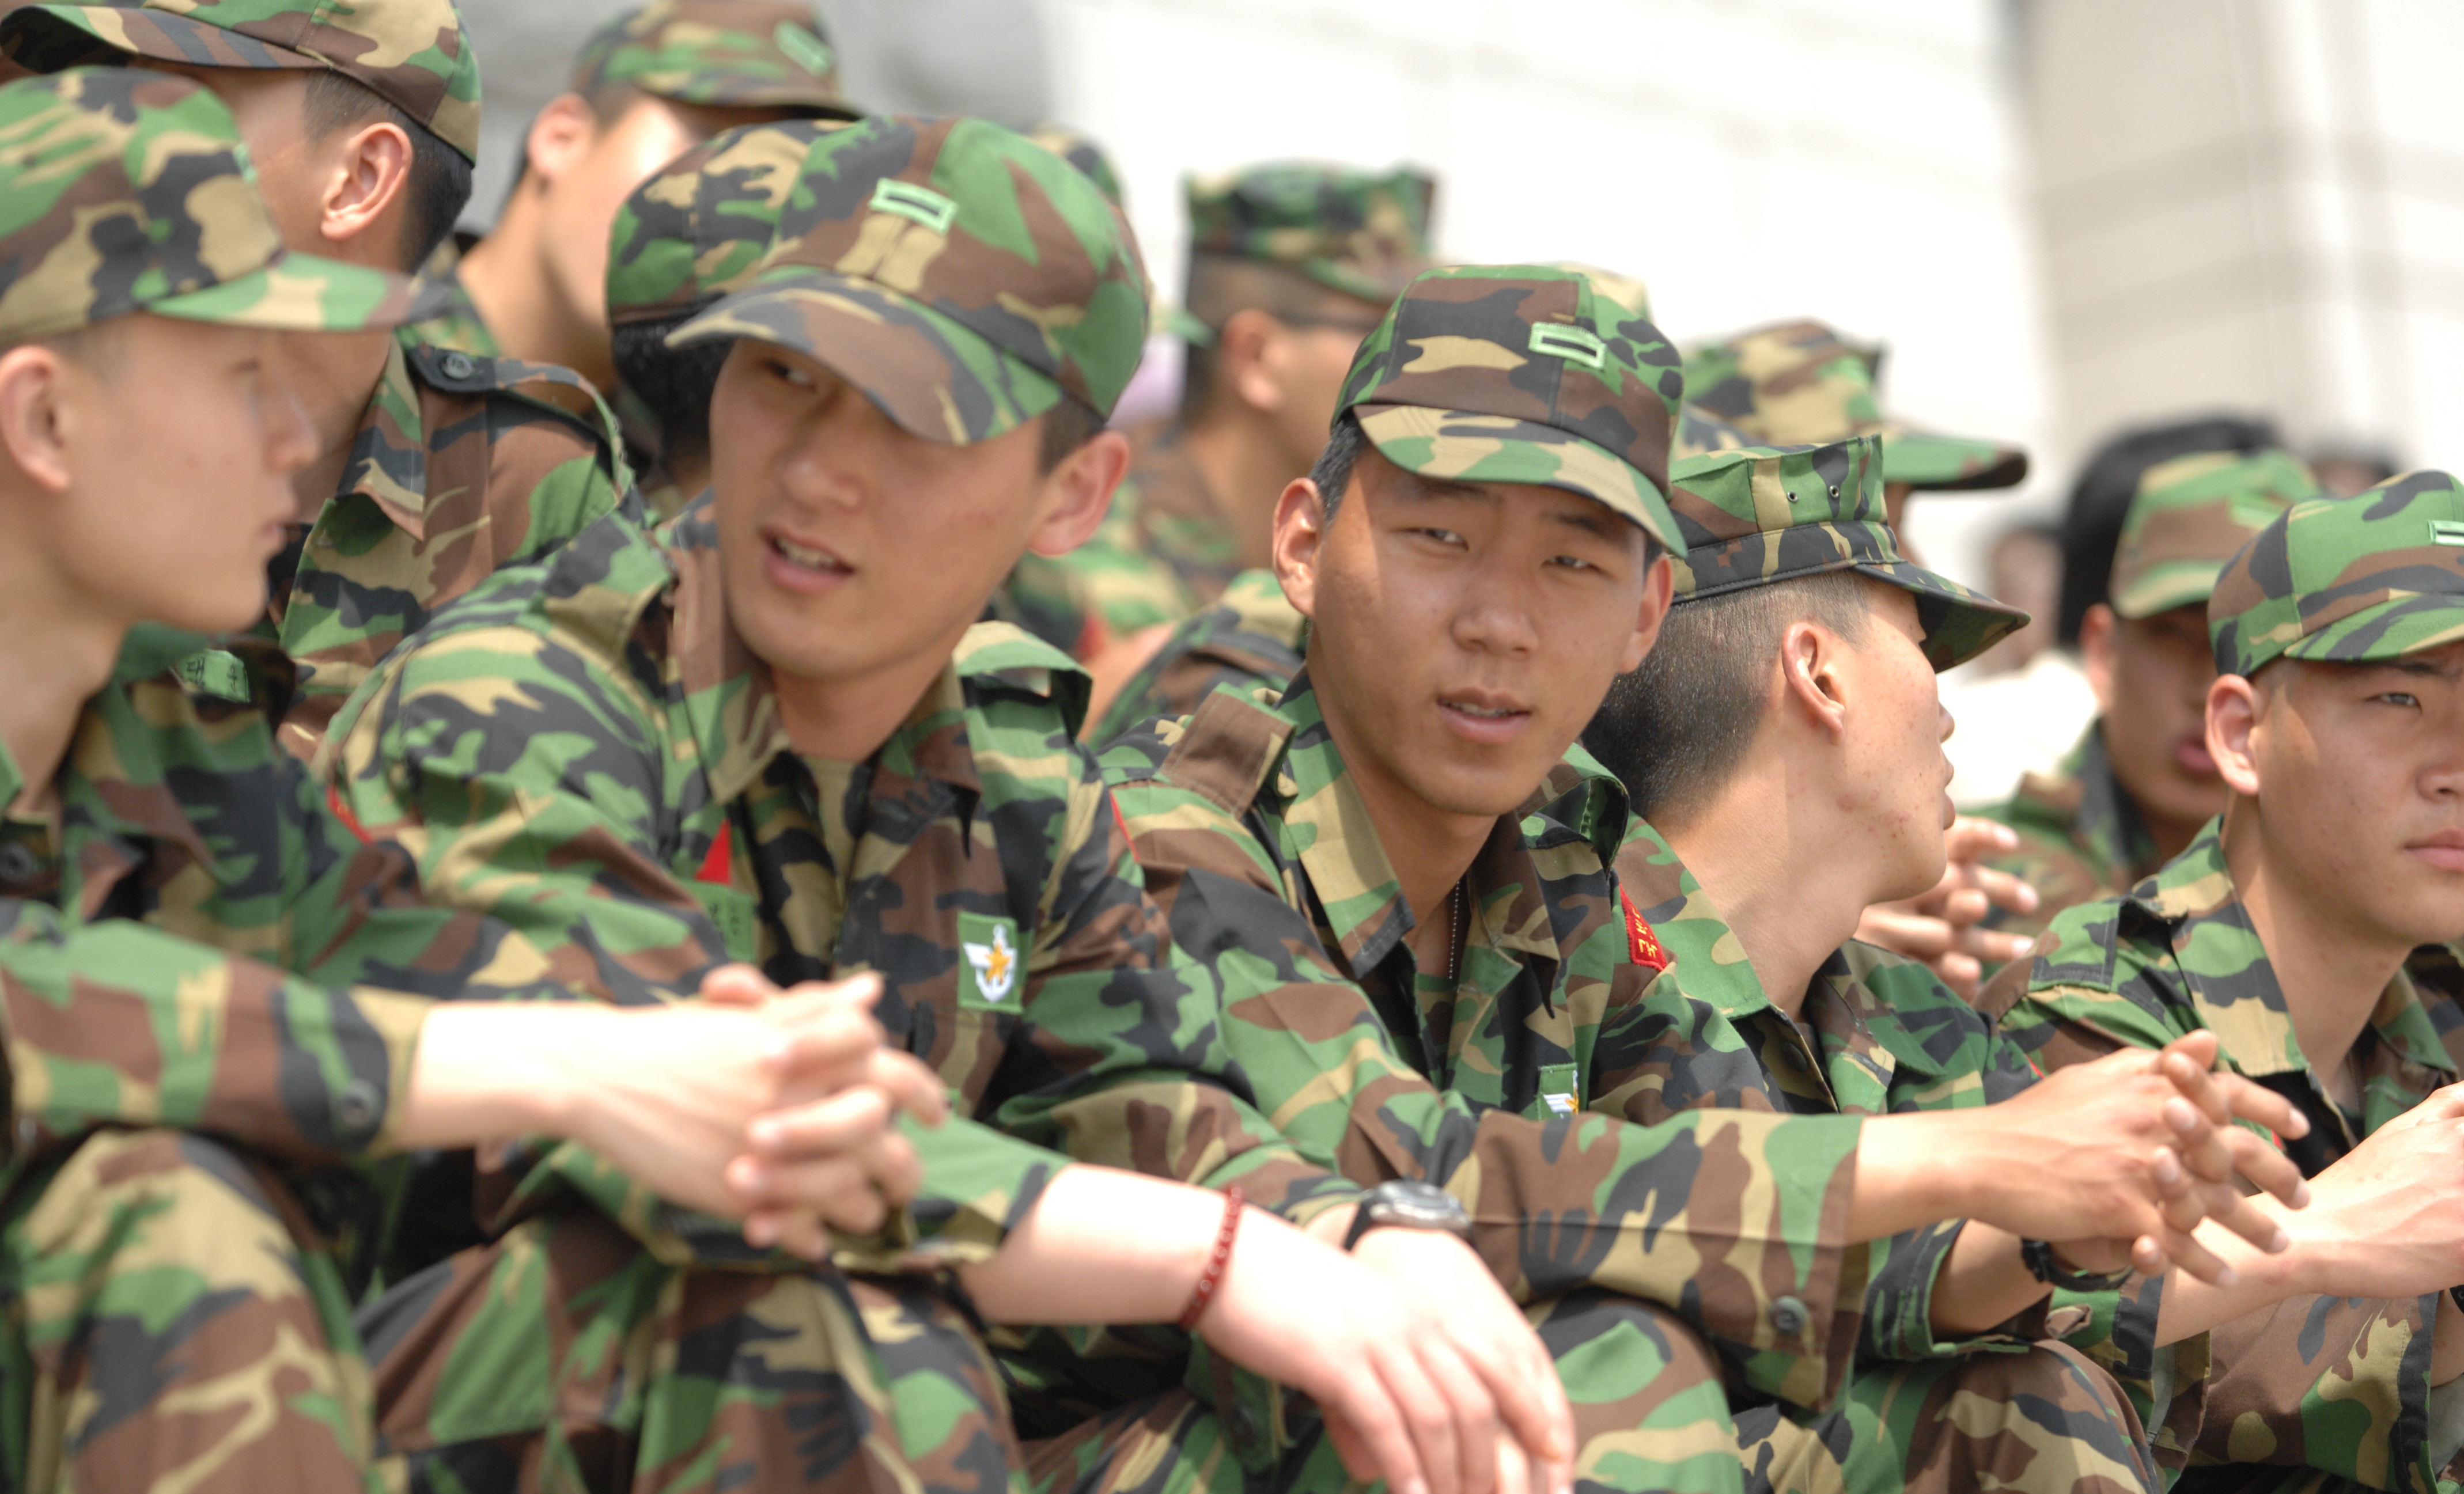 Essay on compulsory military training